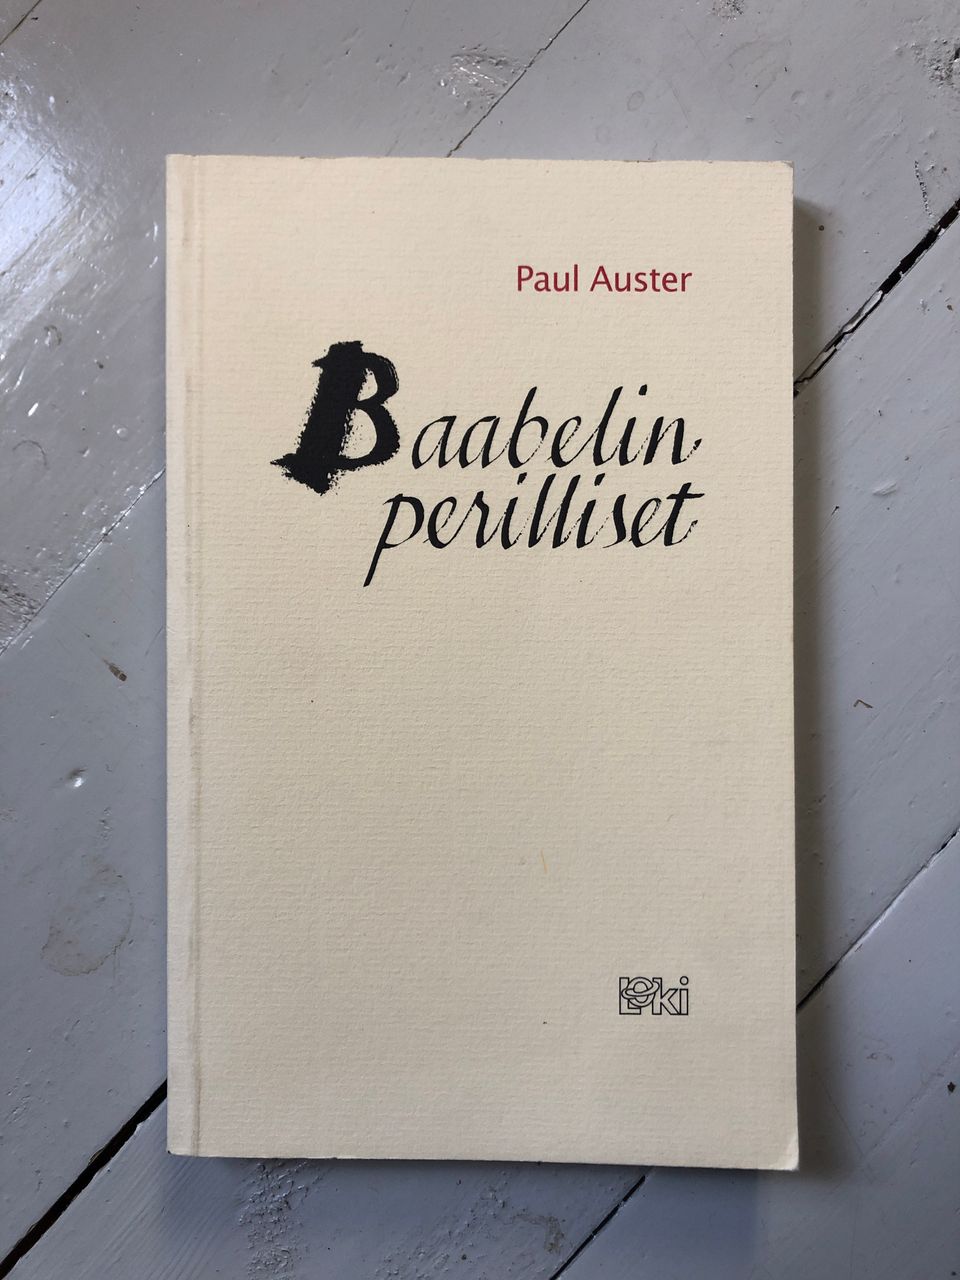 Paul Auster, Baabelin perilliset